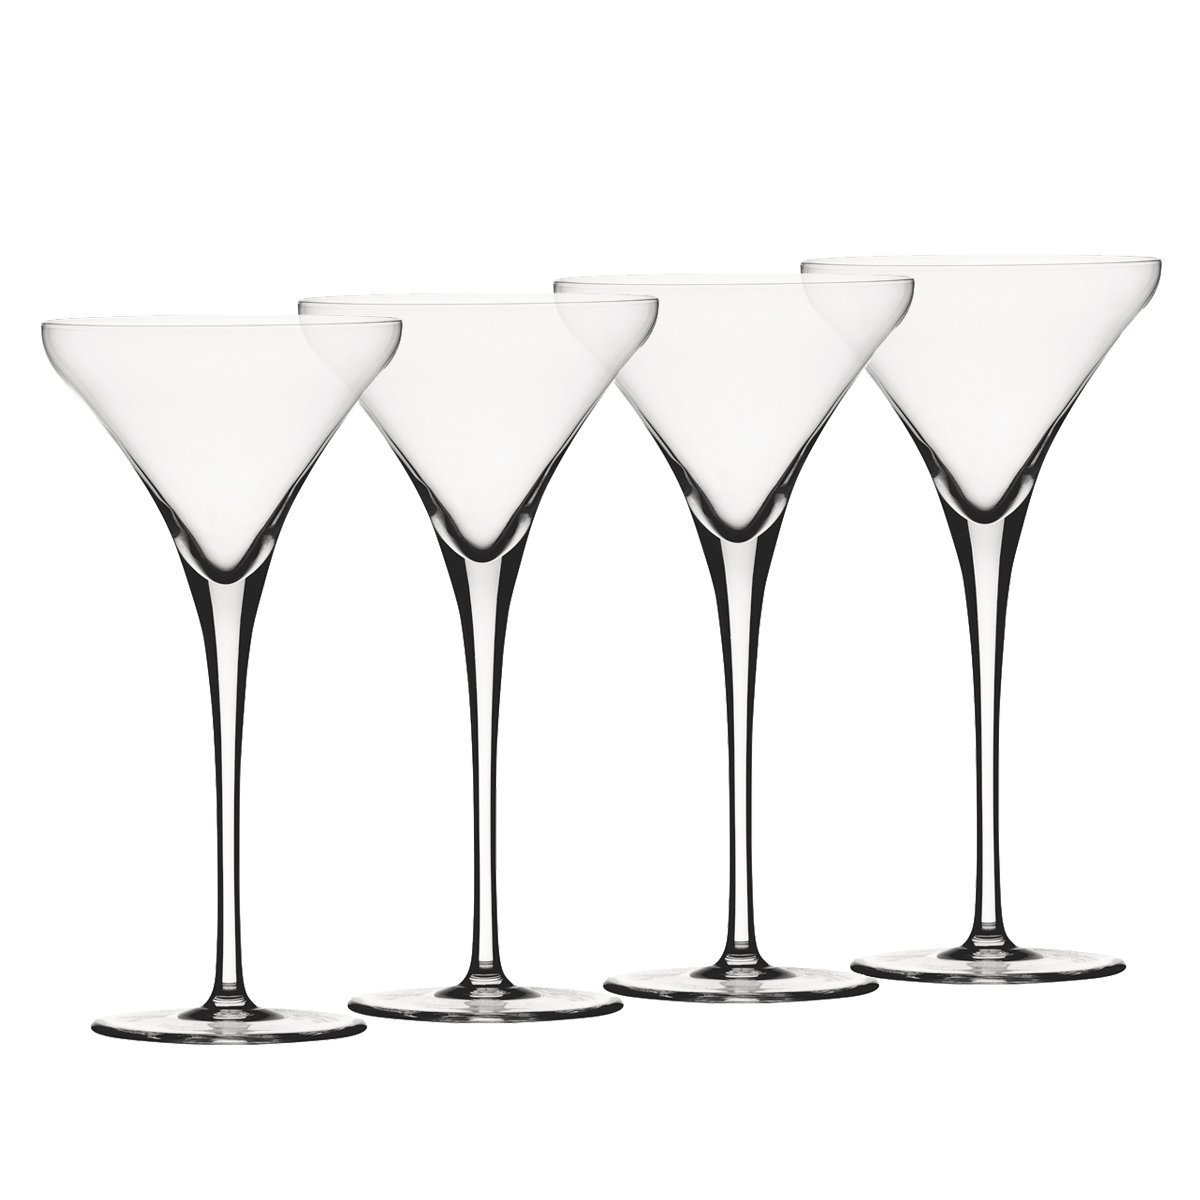 Picture of Spiegelau 1416150 9.2 oz Willsberger Martini Glass - Set of 4